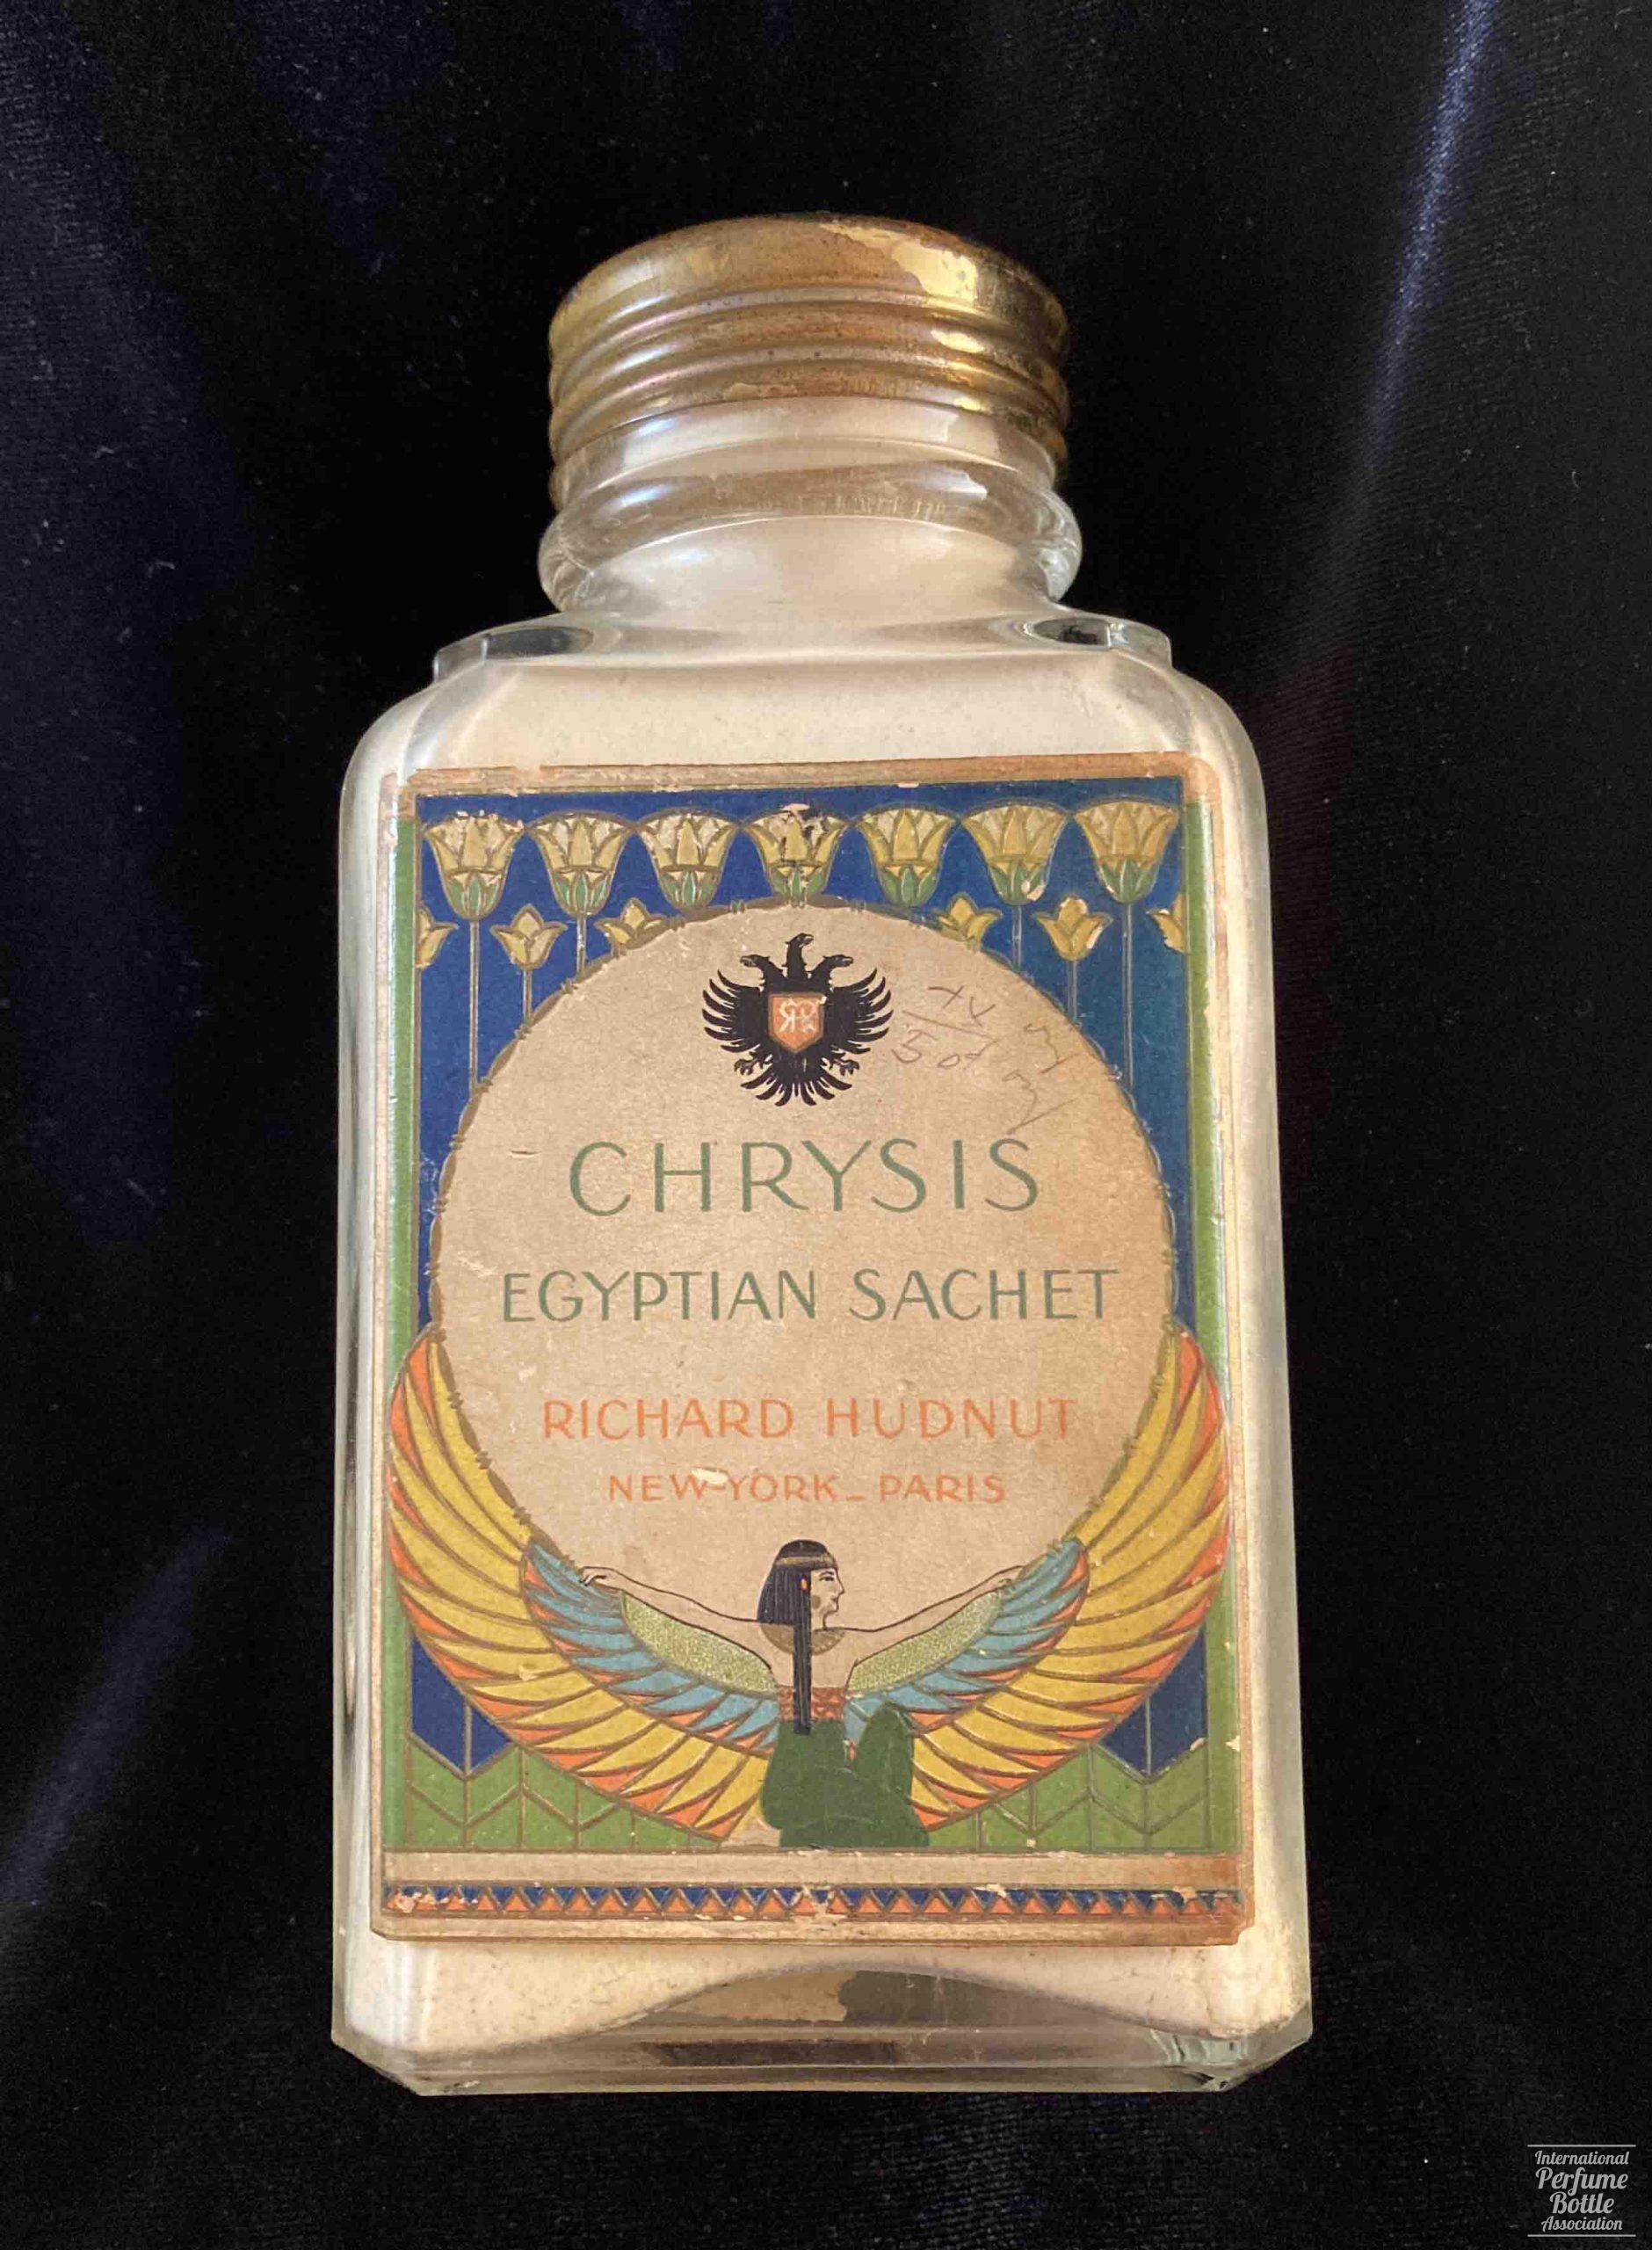 "Chrysis Egyptian Sachet" by Richard Hudnut